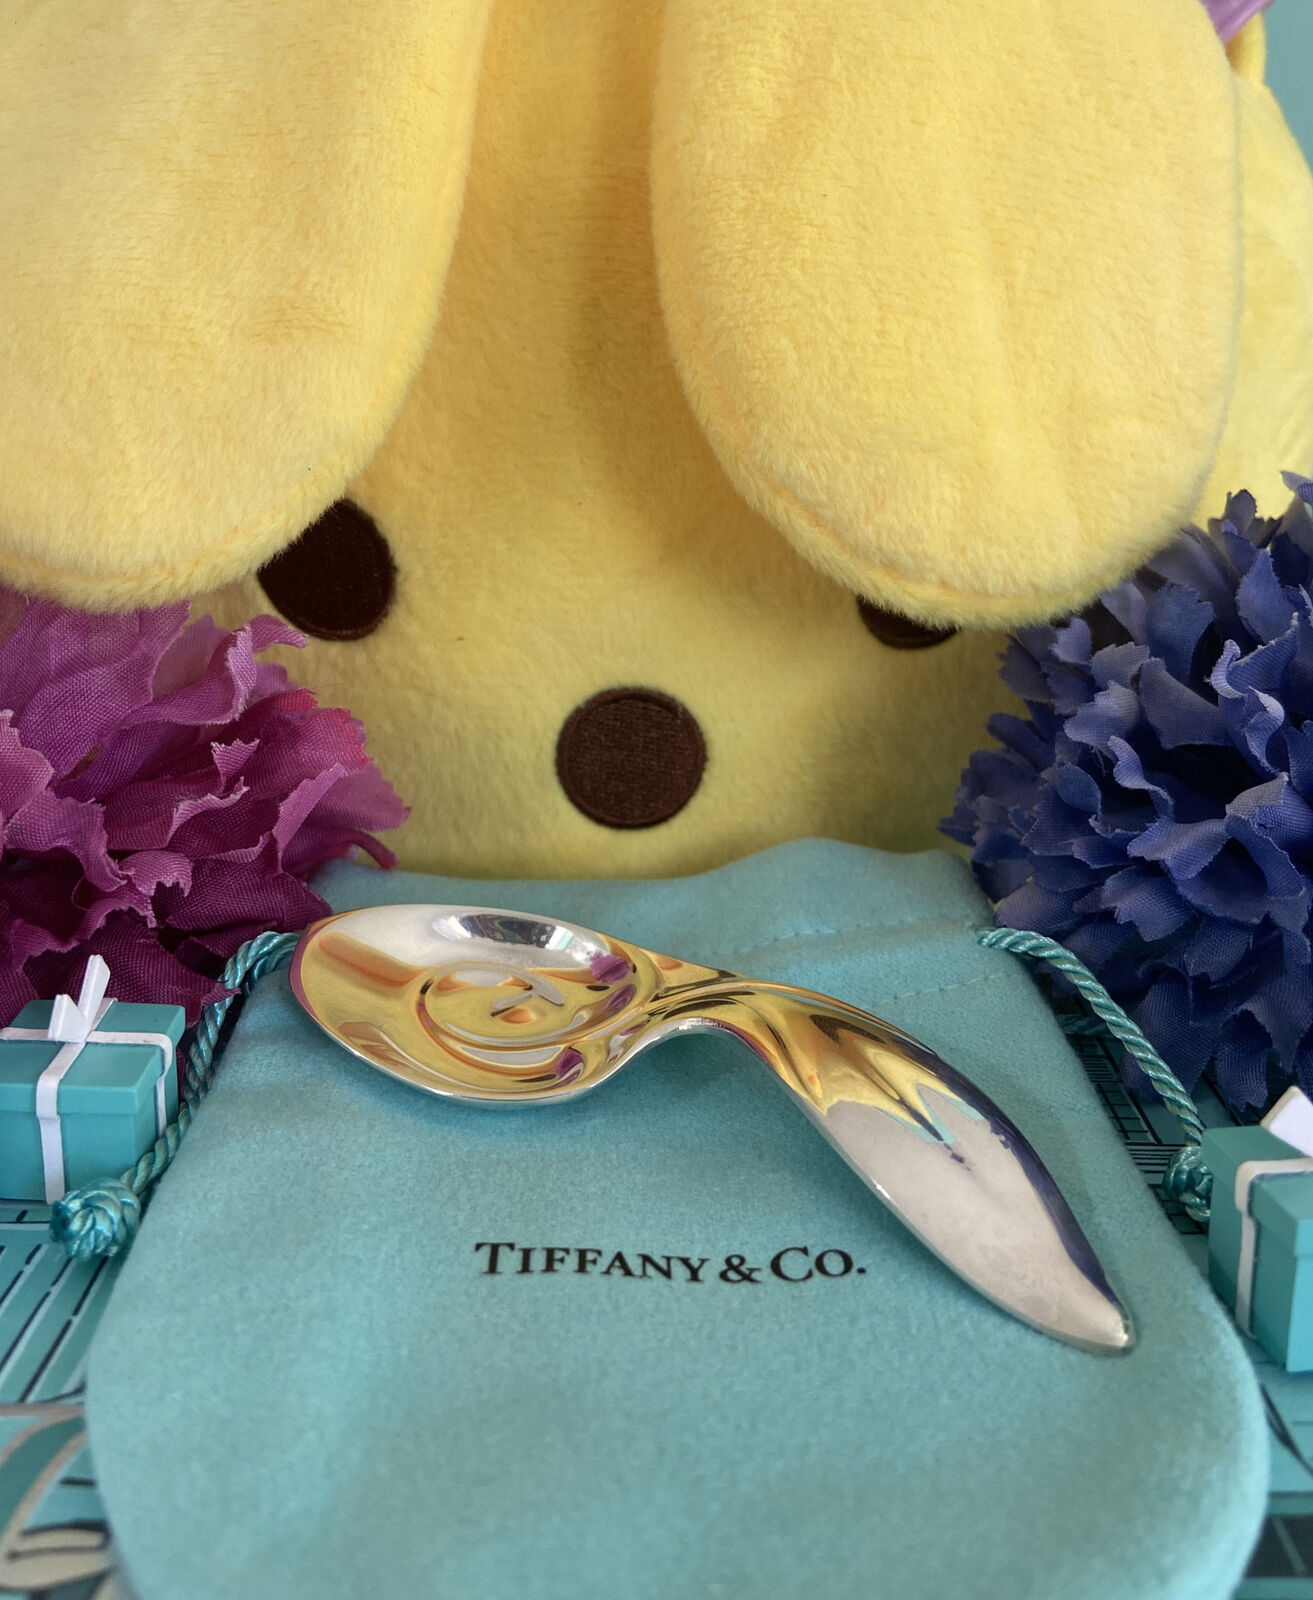 Tiffany&Co Bunny Rabbit Baby Spoon High material Sterling Utencil Feeding Ranking TOP11 Silv